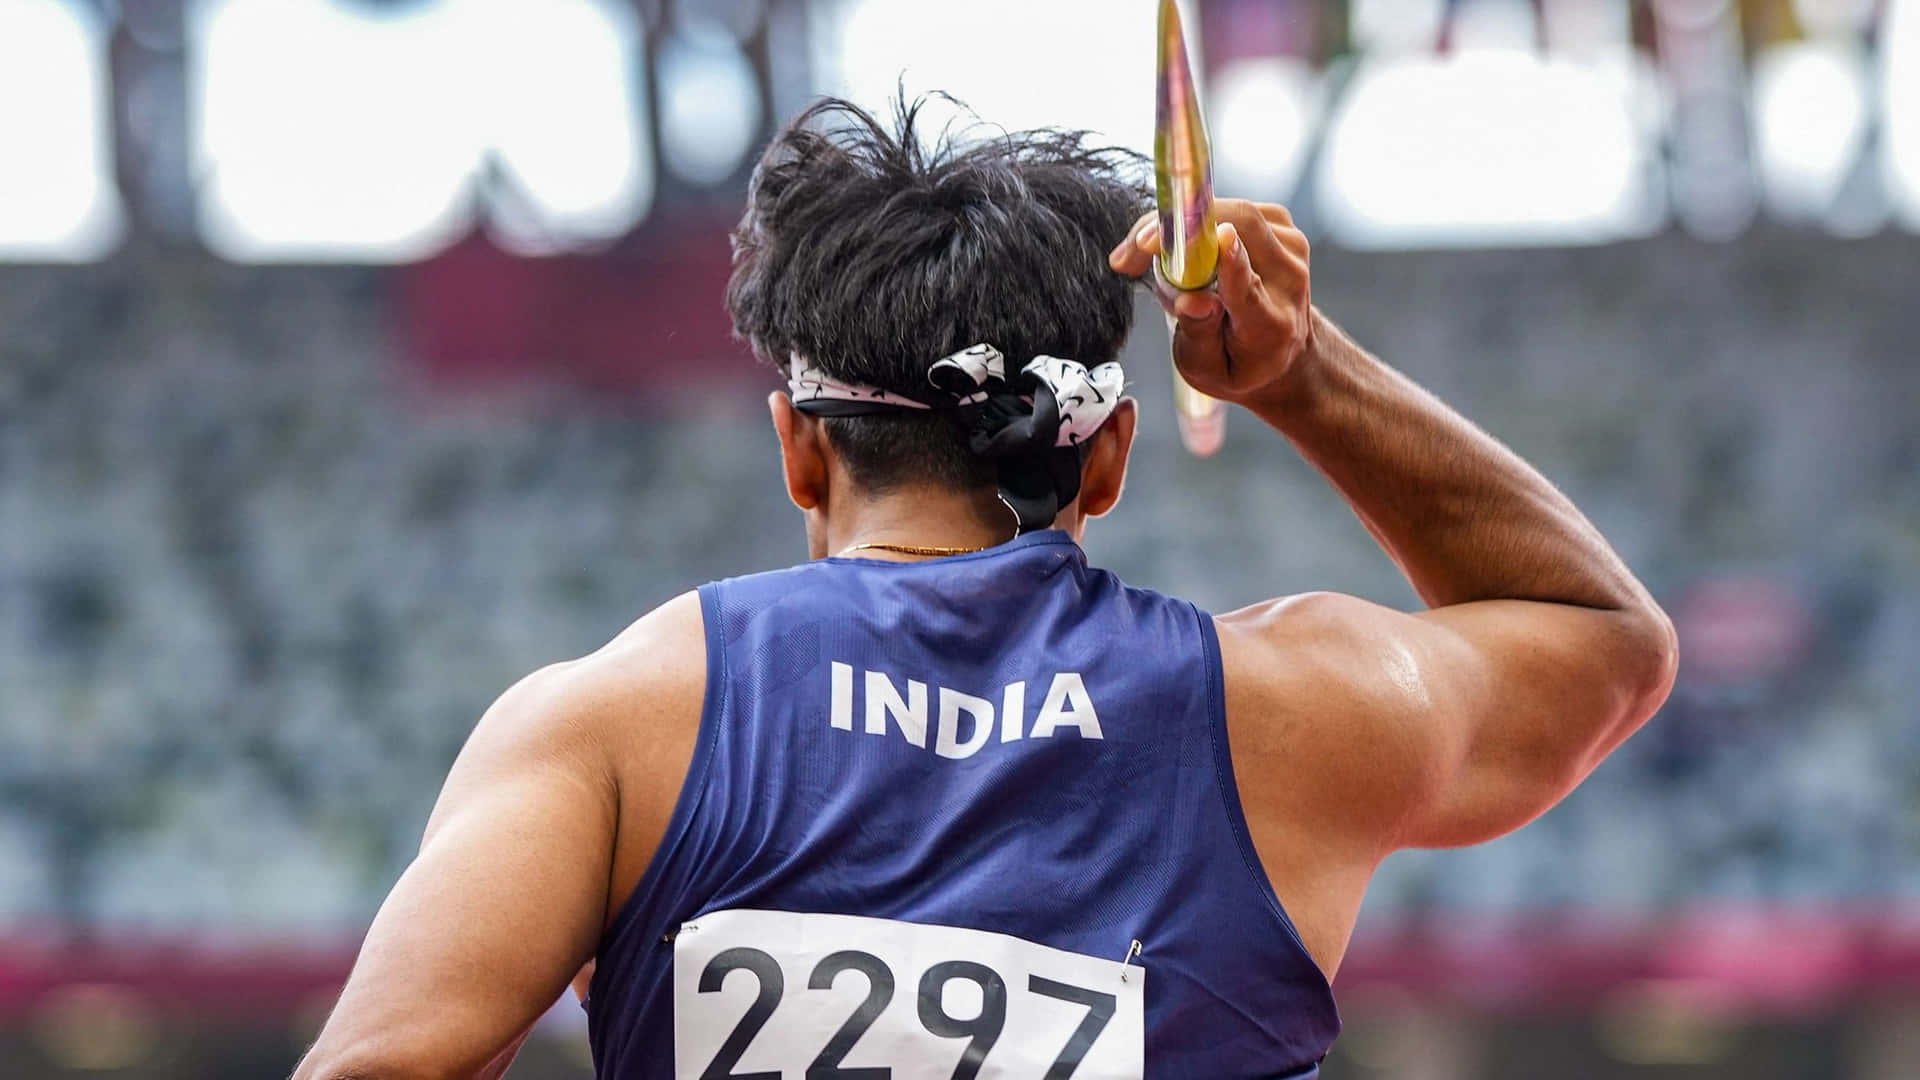 Neeraj Chopra - India's Proudest Athlete